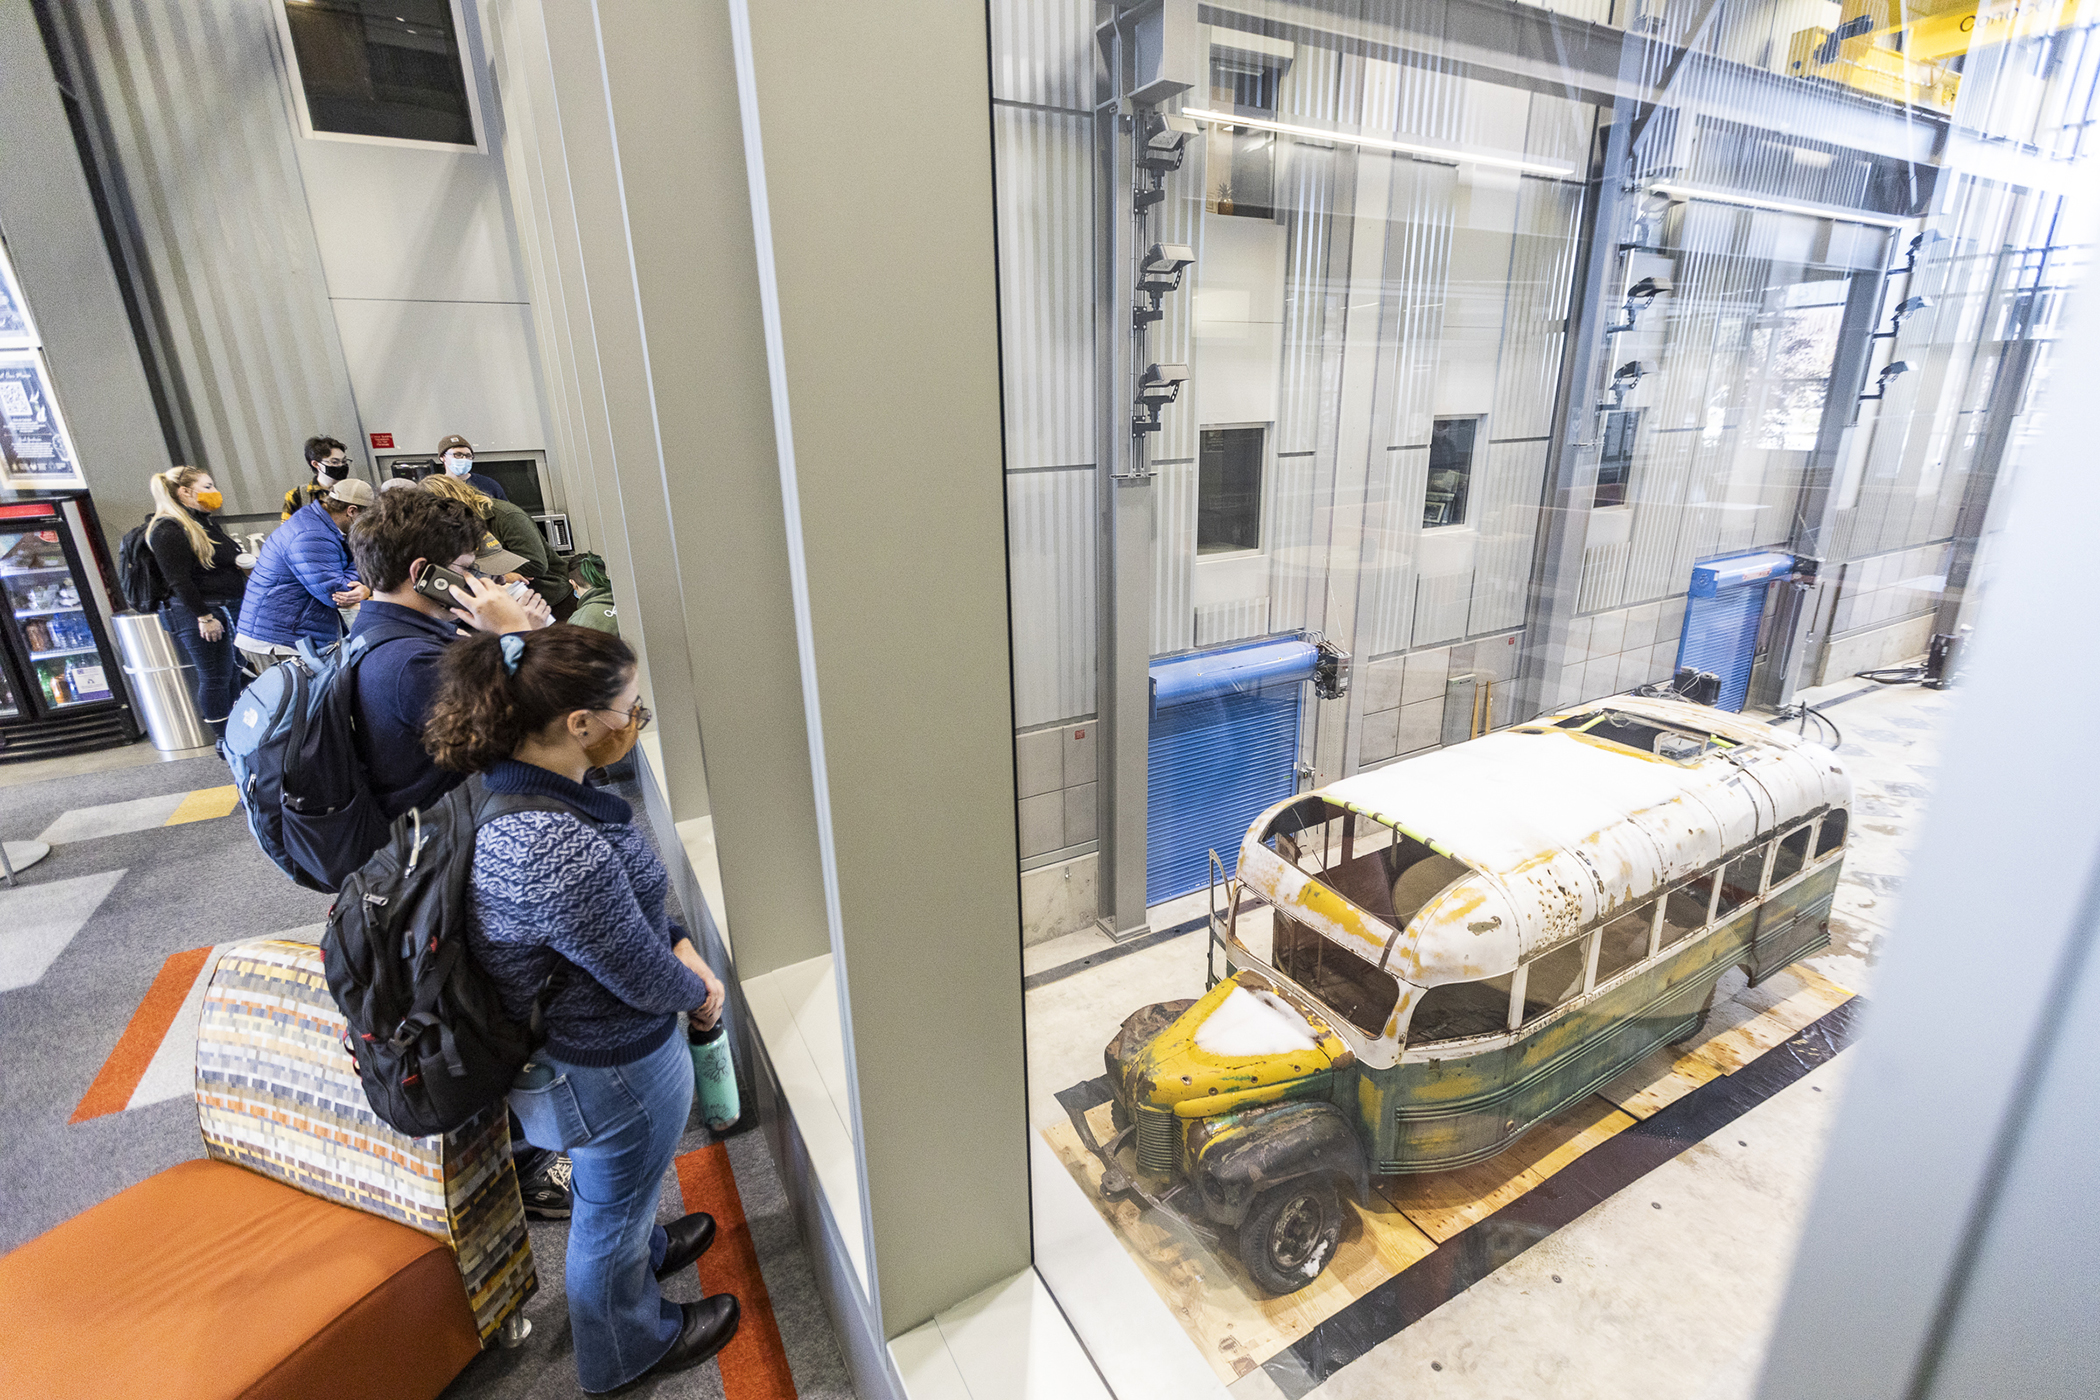 People look at Bus 142 through windows in the engineering building atrium.